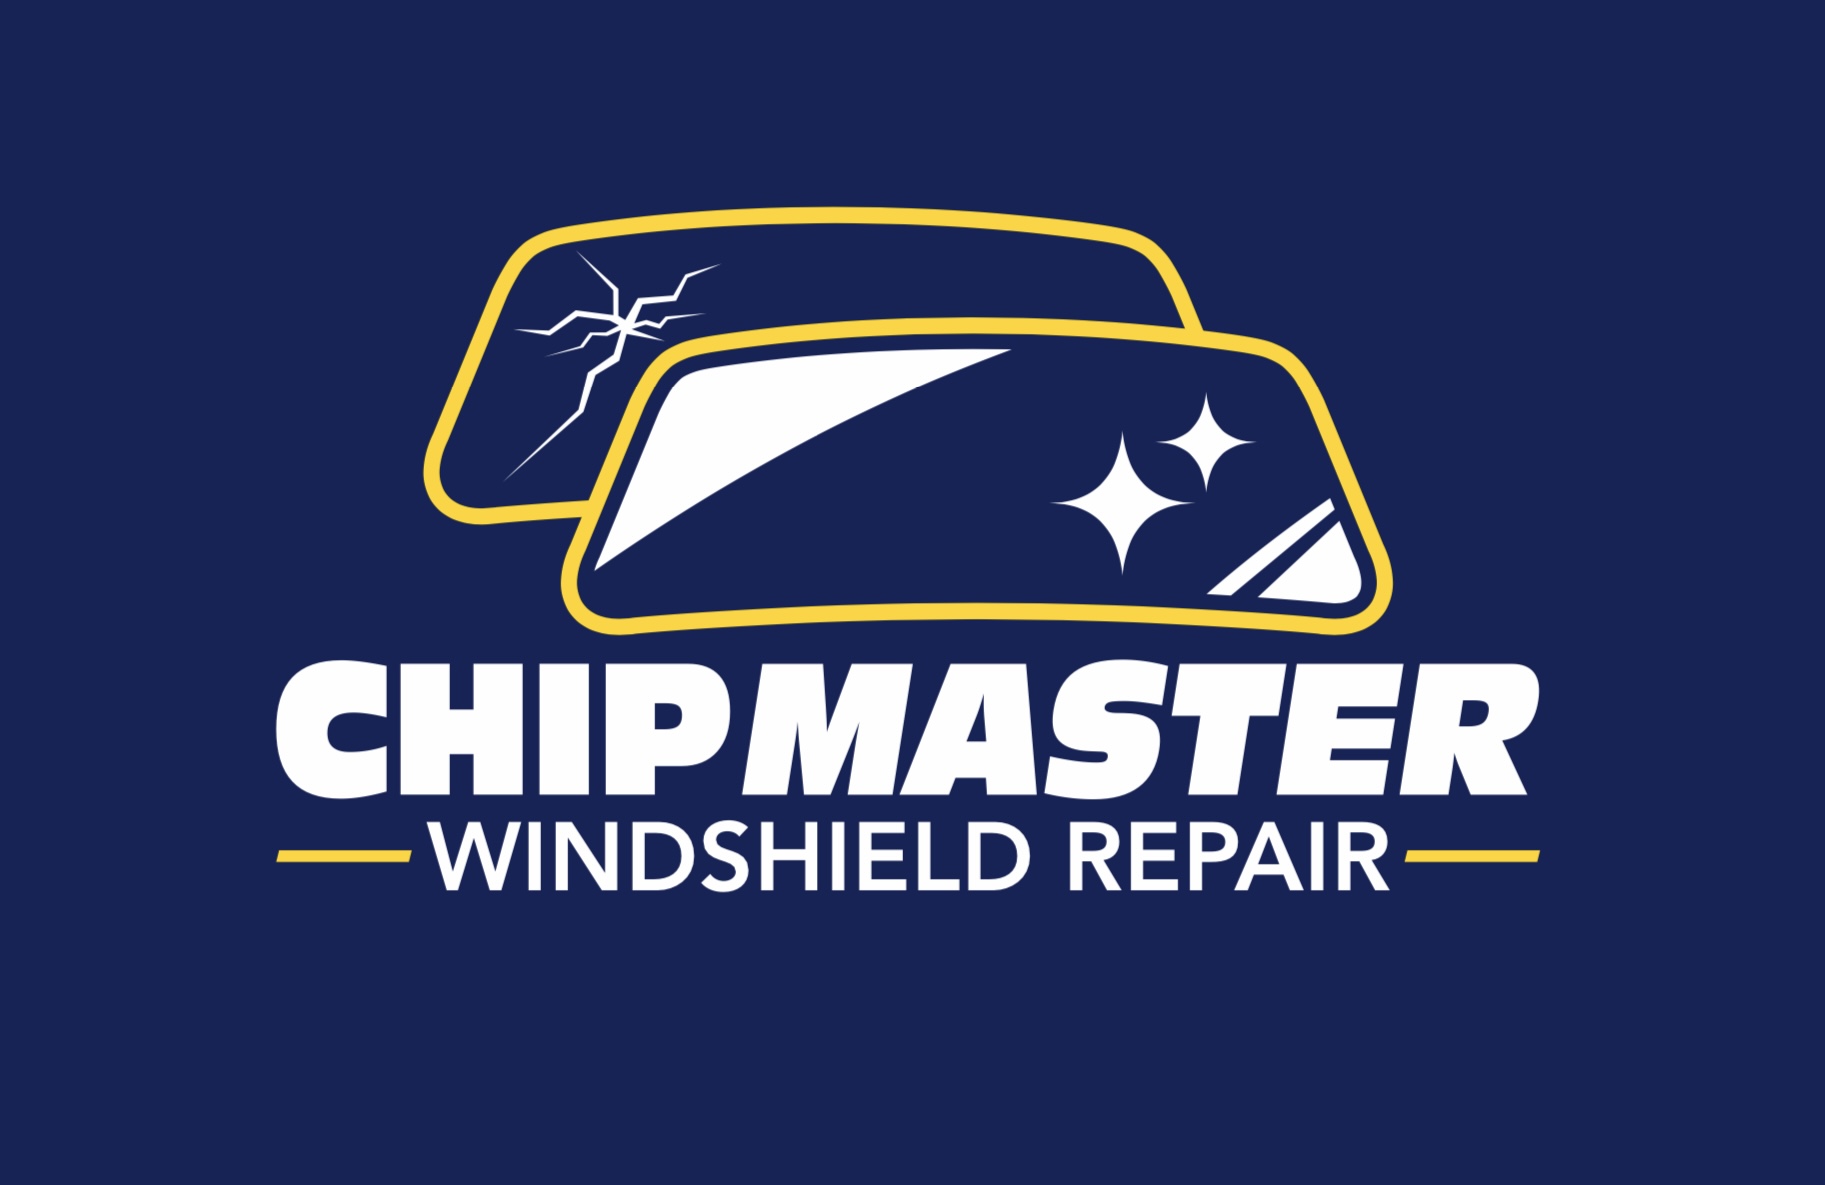 CHIP MASTER WINDSHIELD REPAIR